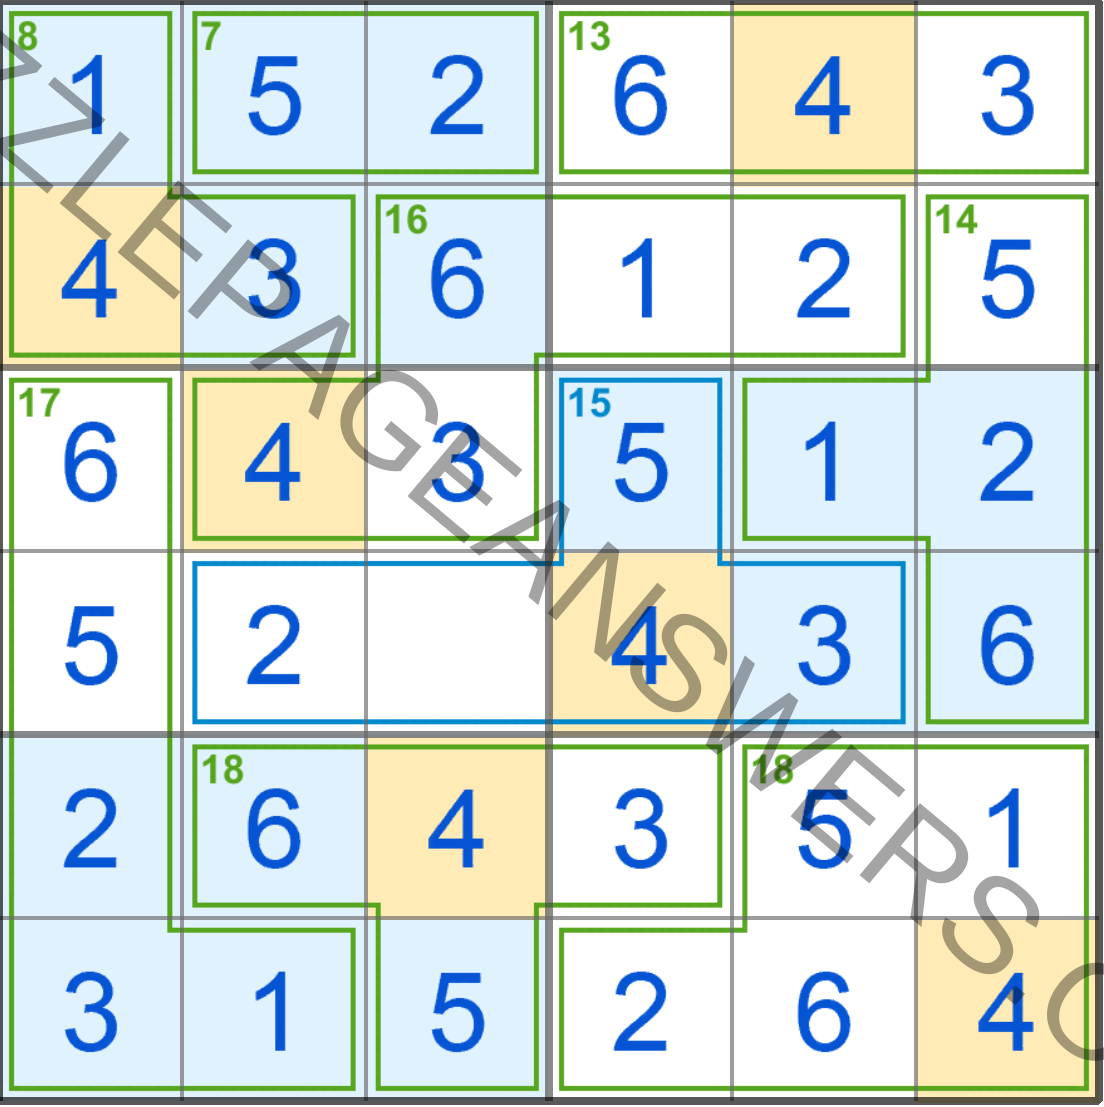 sudoku rules